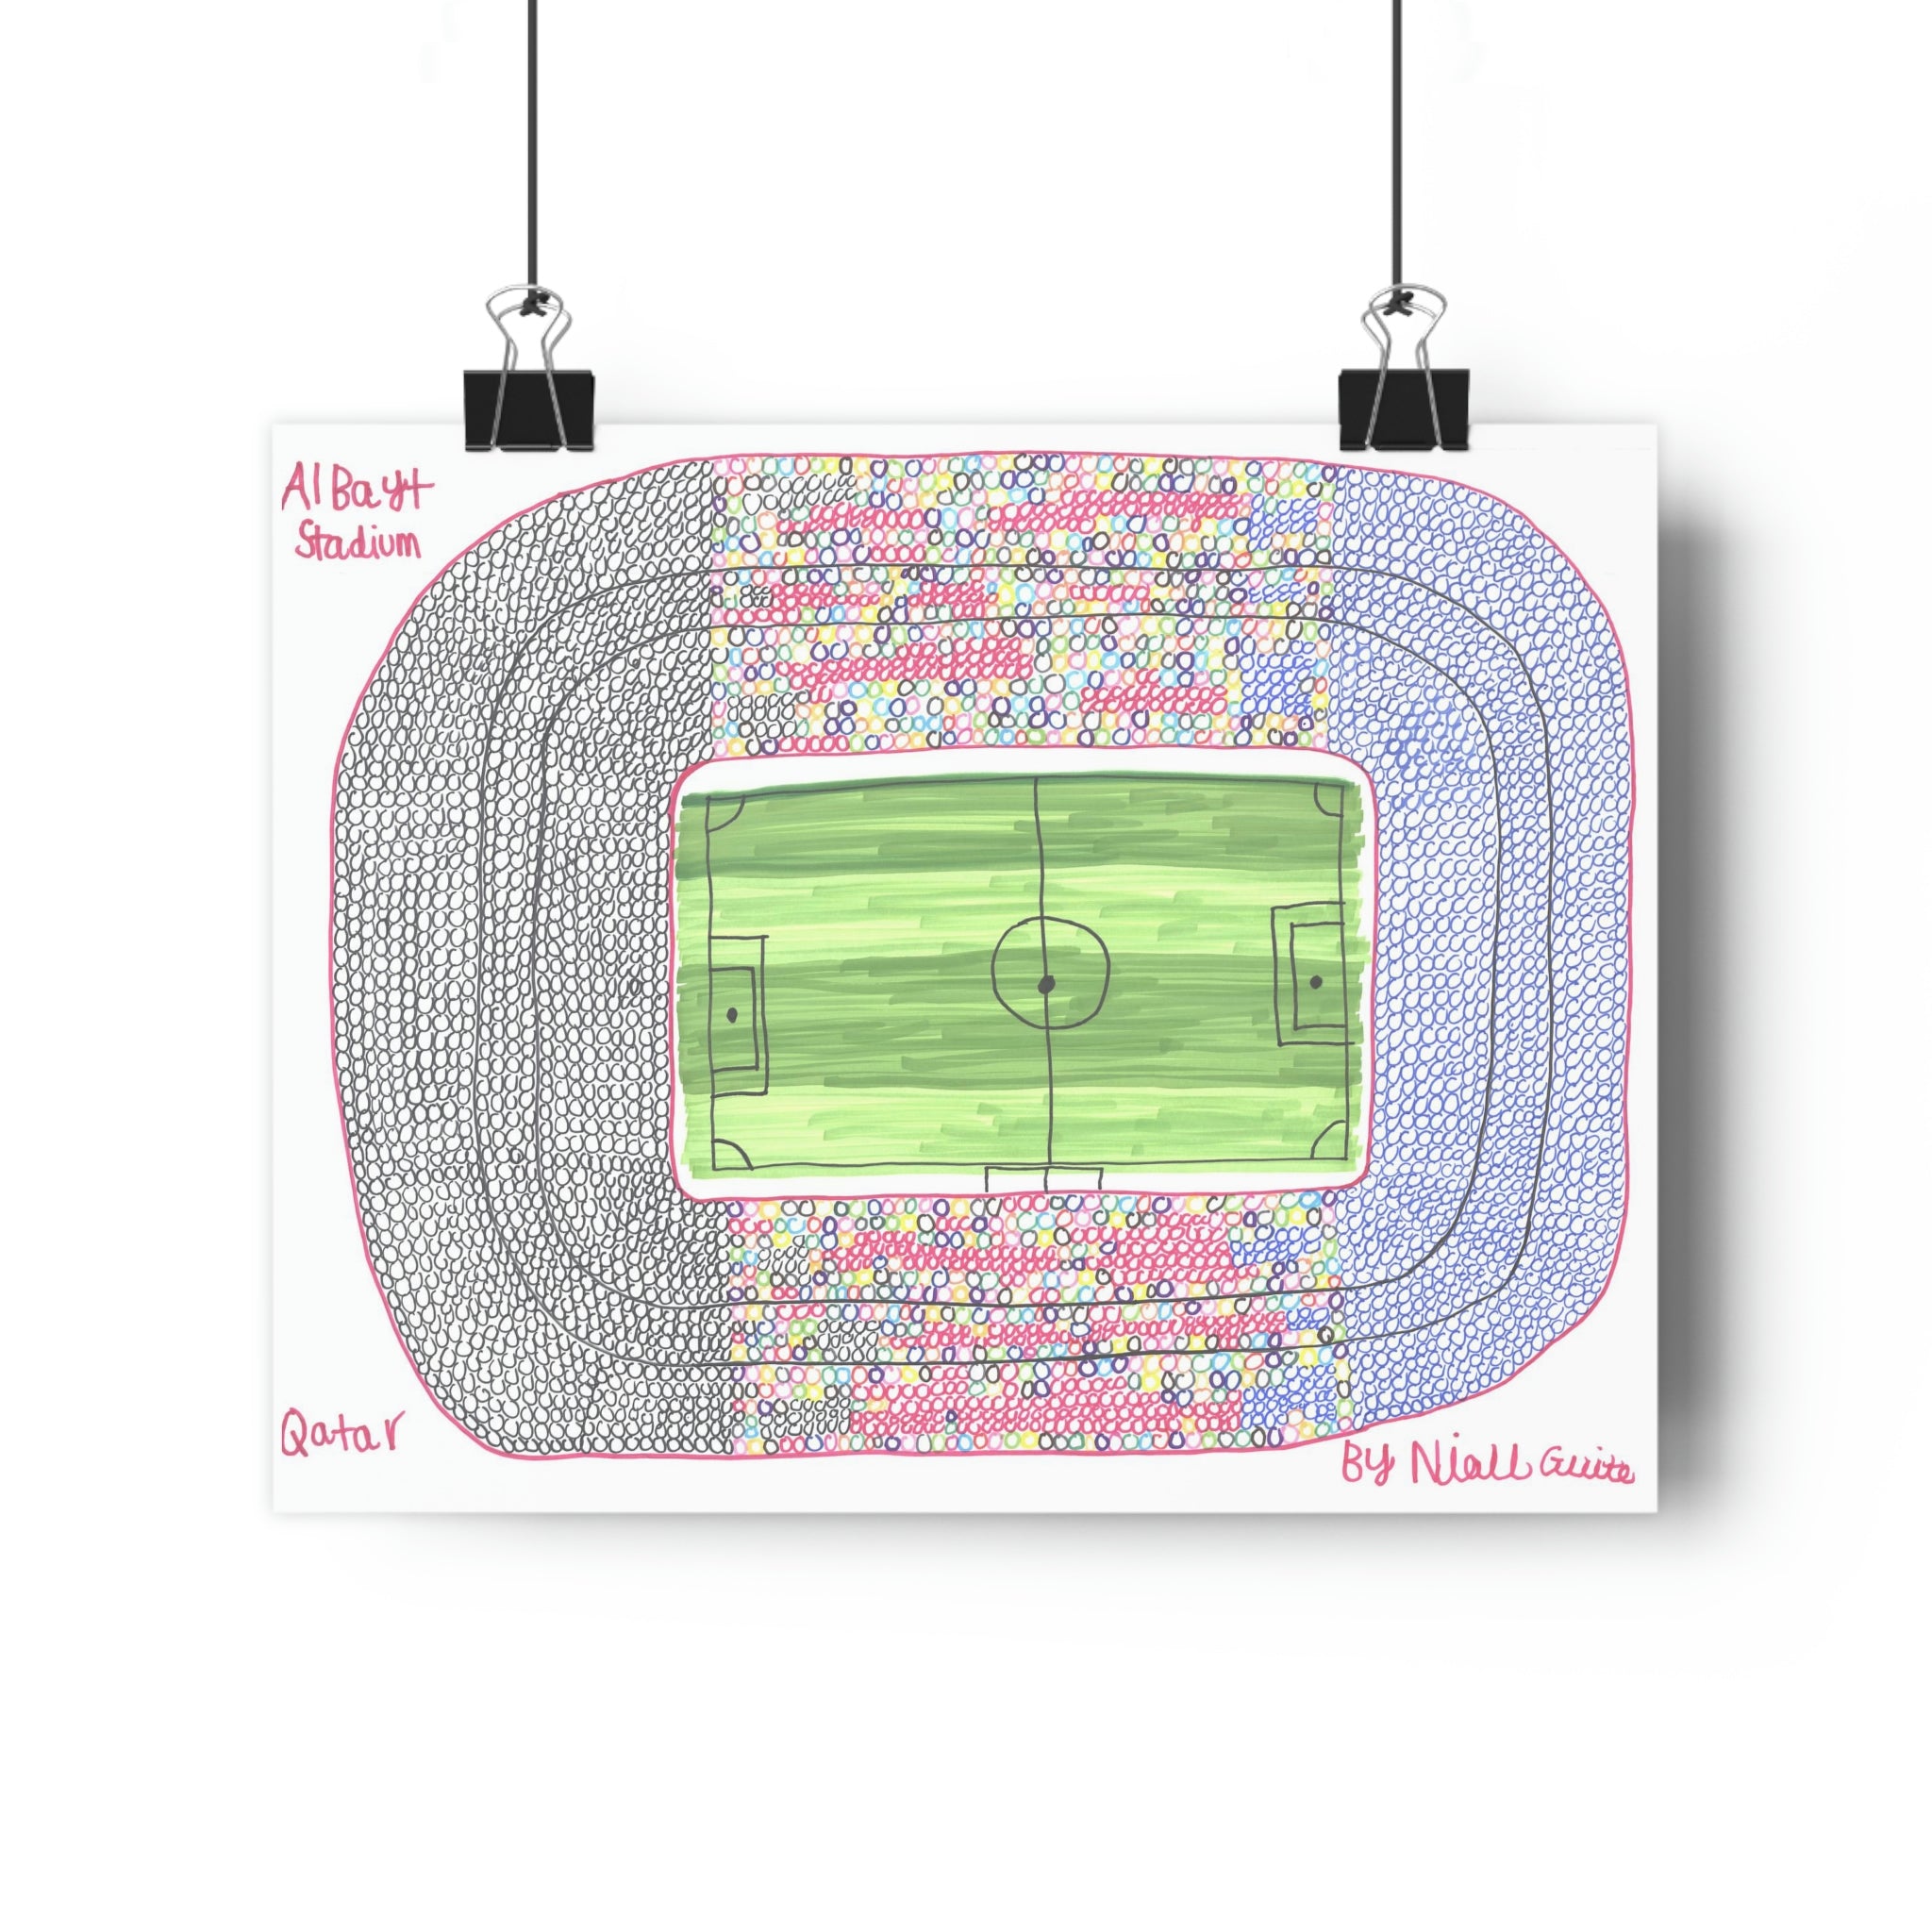 Al Bayt Stadium - 2022 World Cup Special - Print